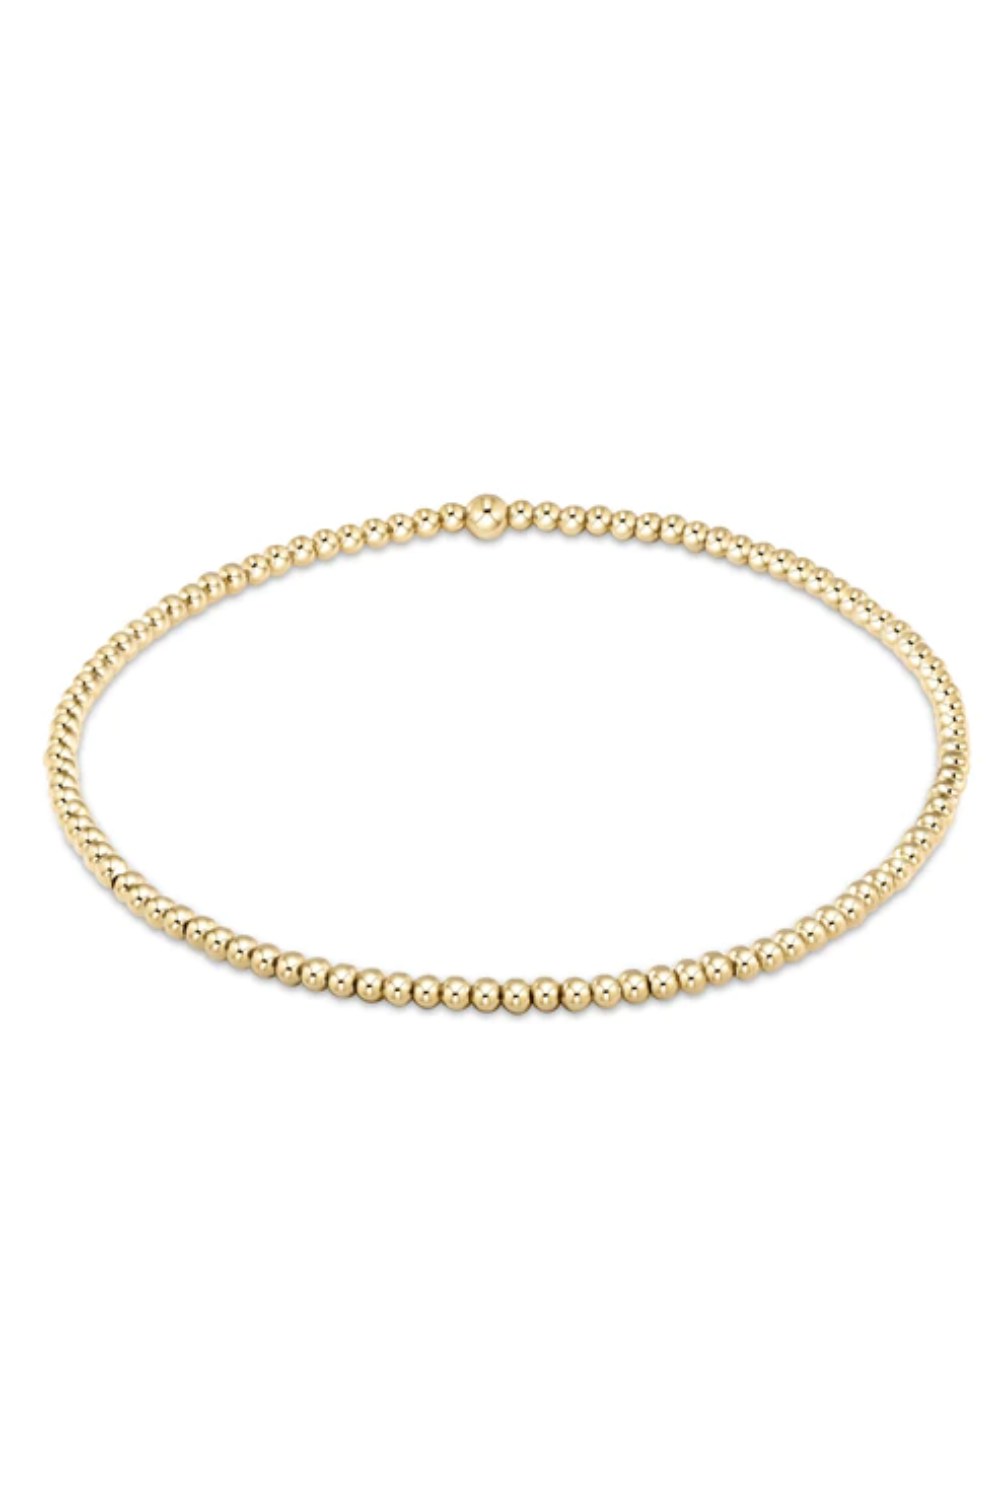 ENewton Classic Gold 2mm Bead Bracelet